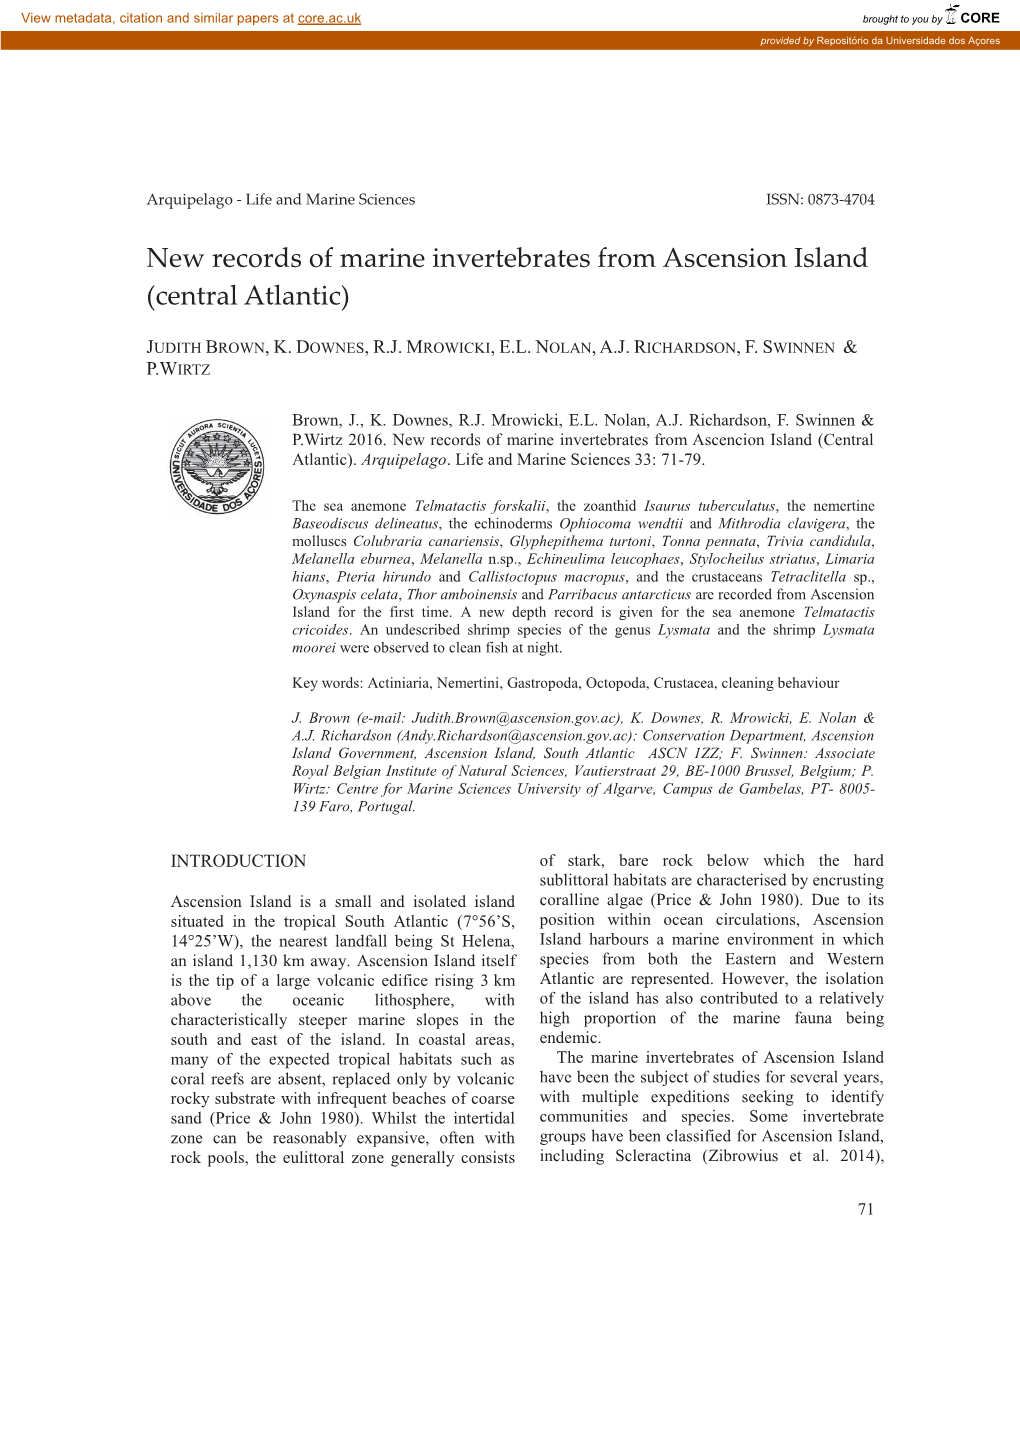 New Records of Marine Invertebrates from Ascension Island (Central Atlantic)